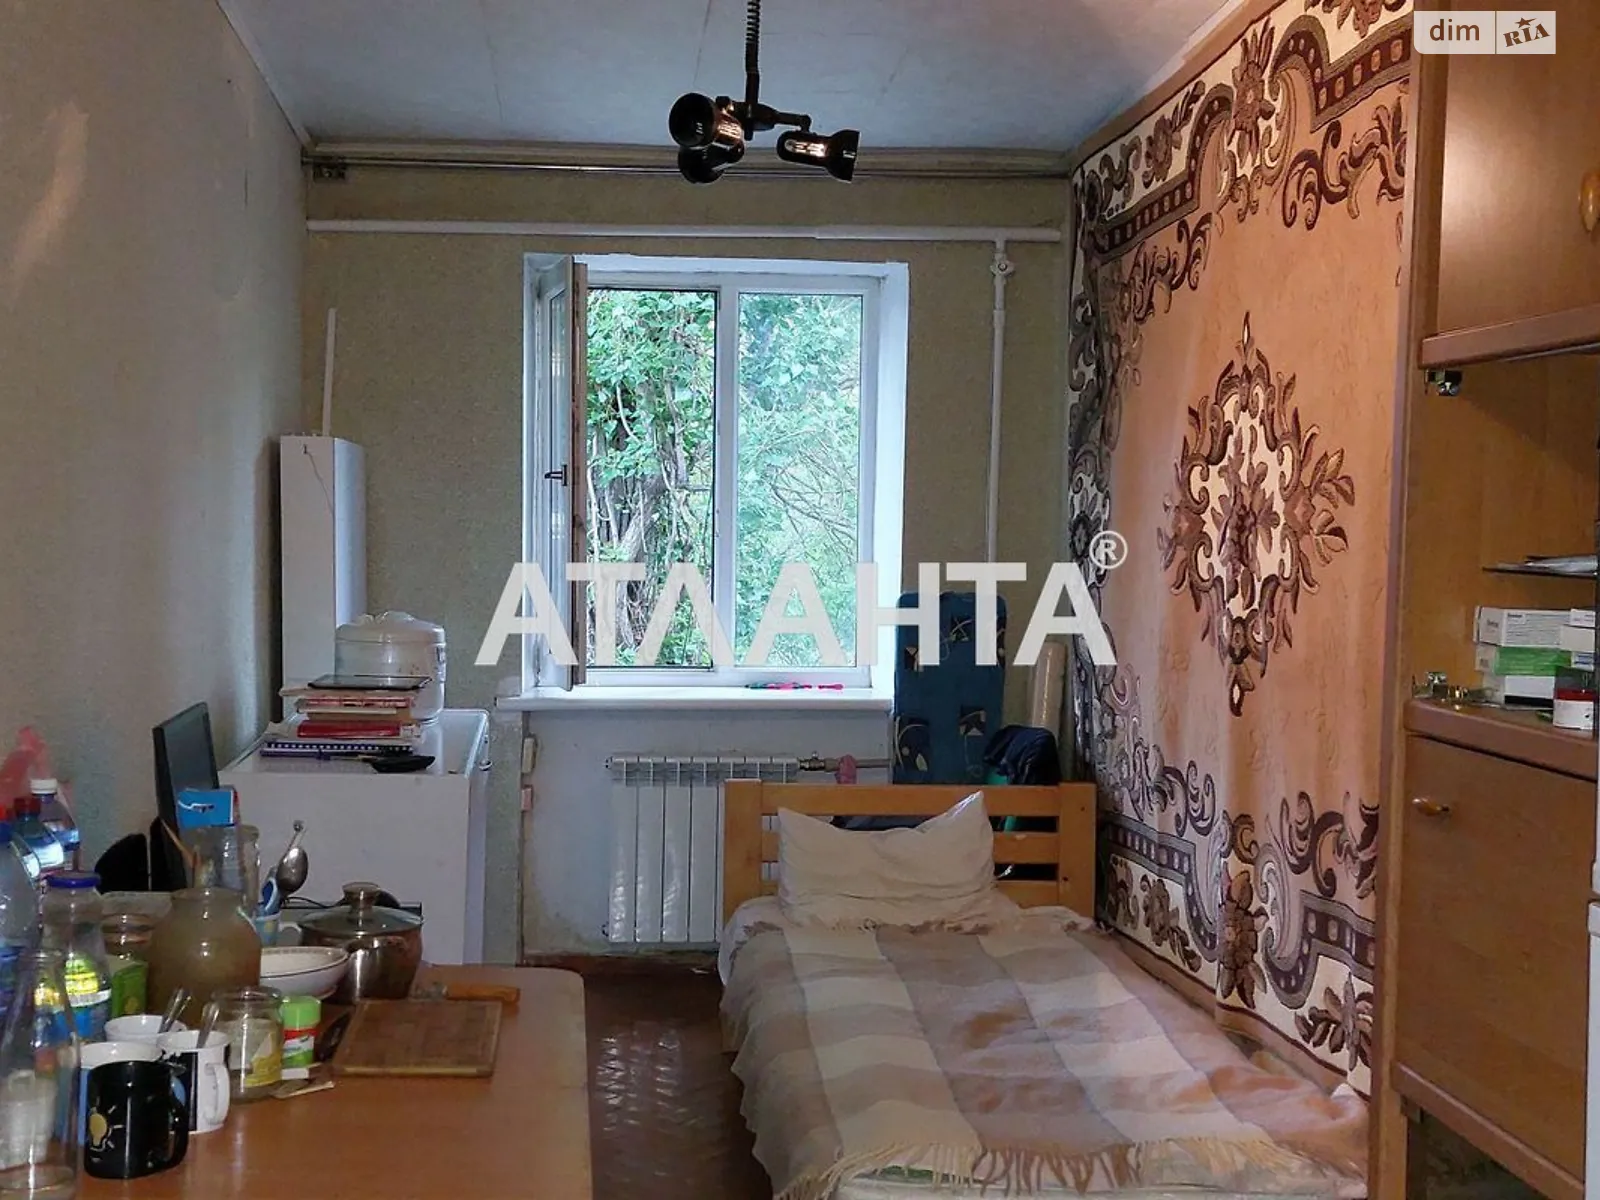 Продается комната 12.5 кв. м в Одессе, цена: 9000 $ - фото 1